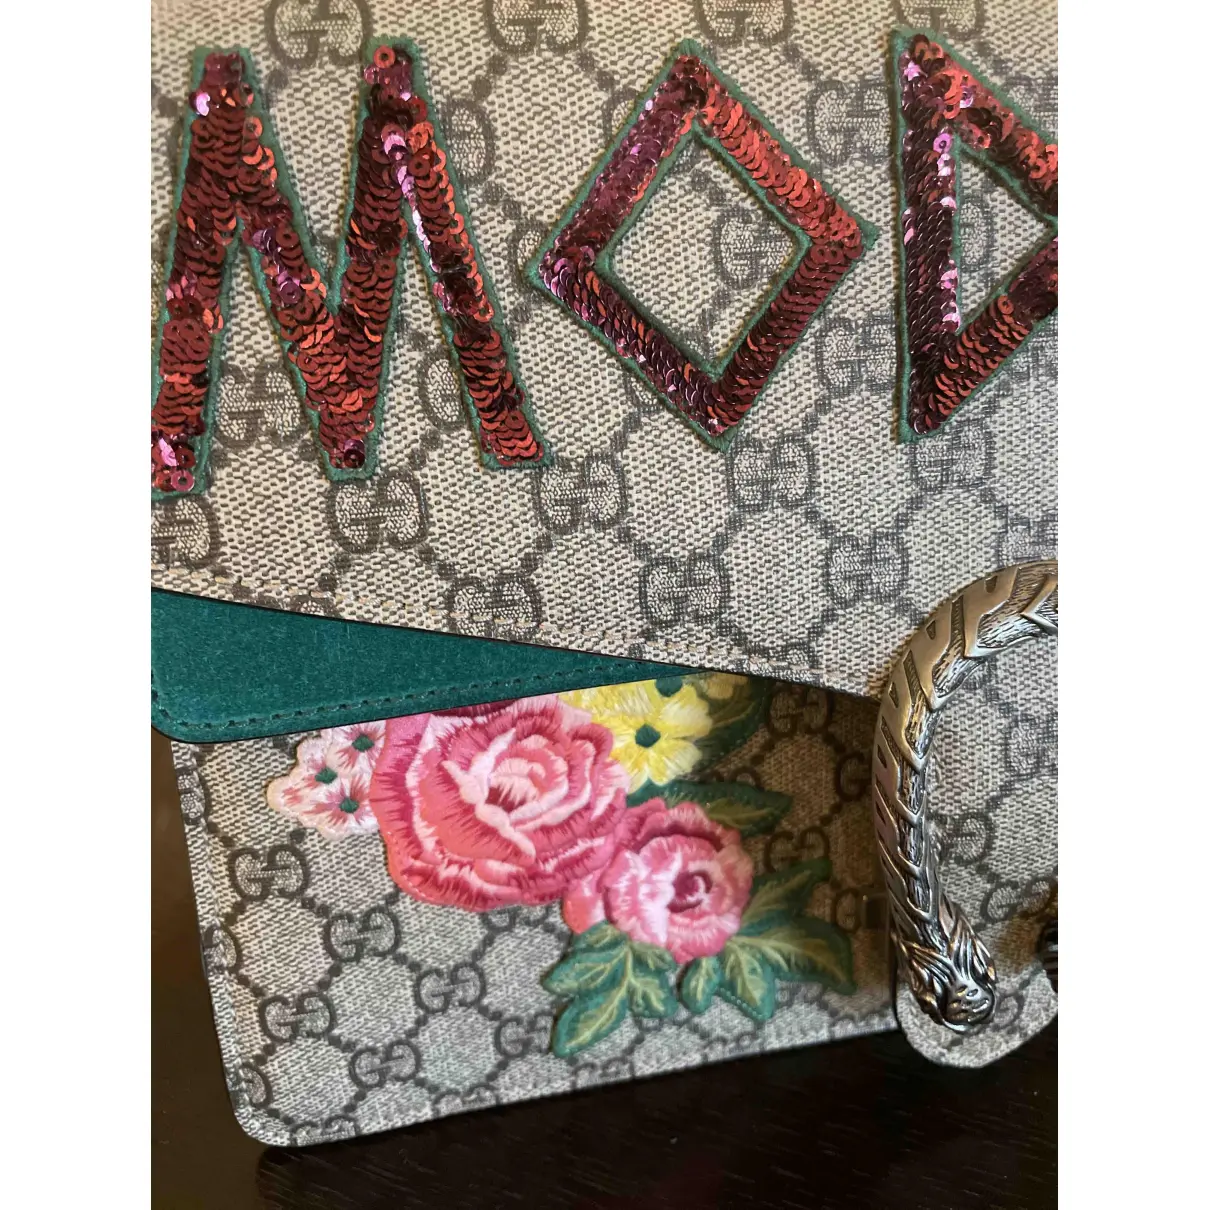 Dionysus handbag Gucci